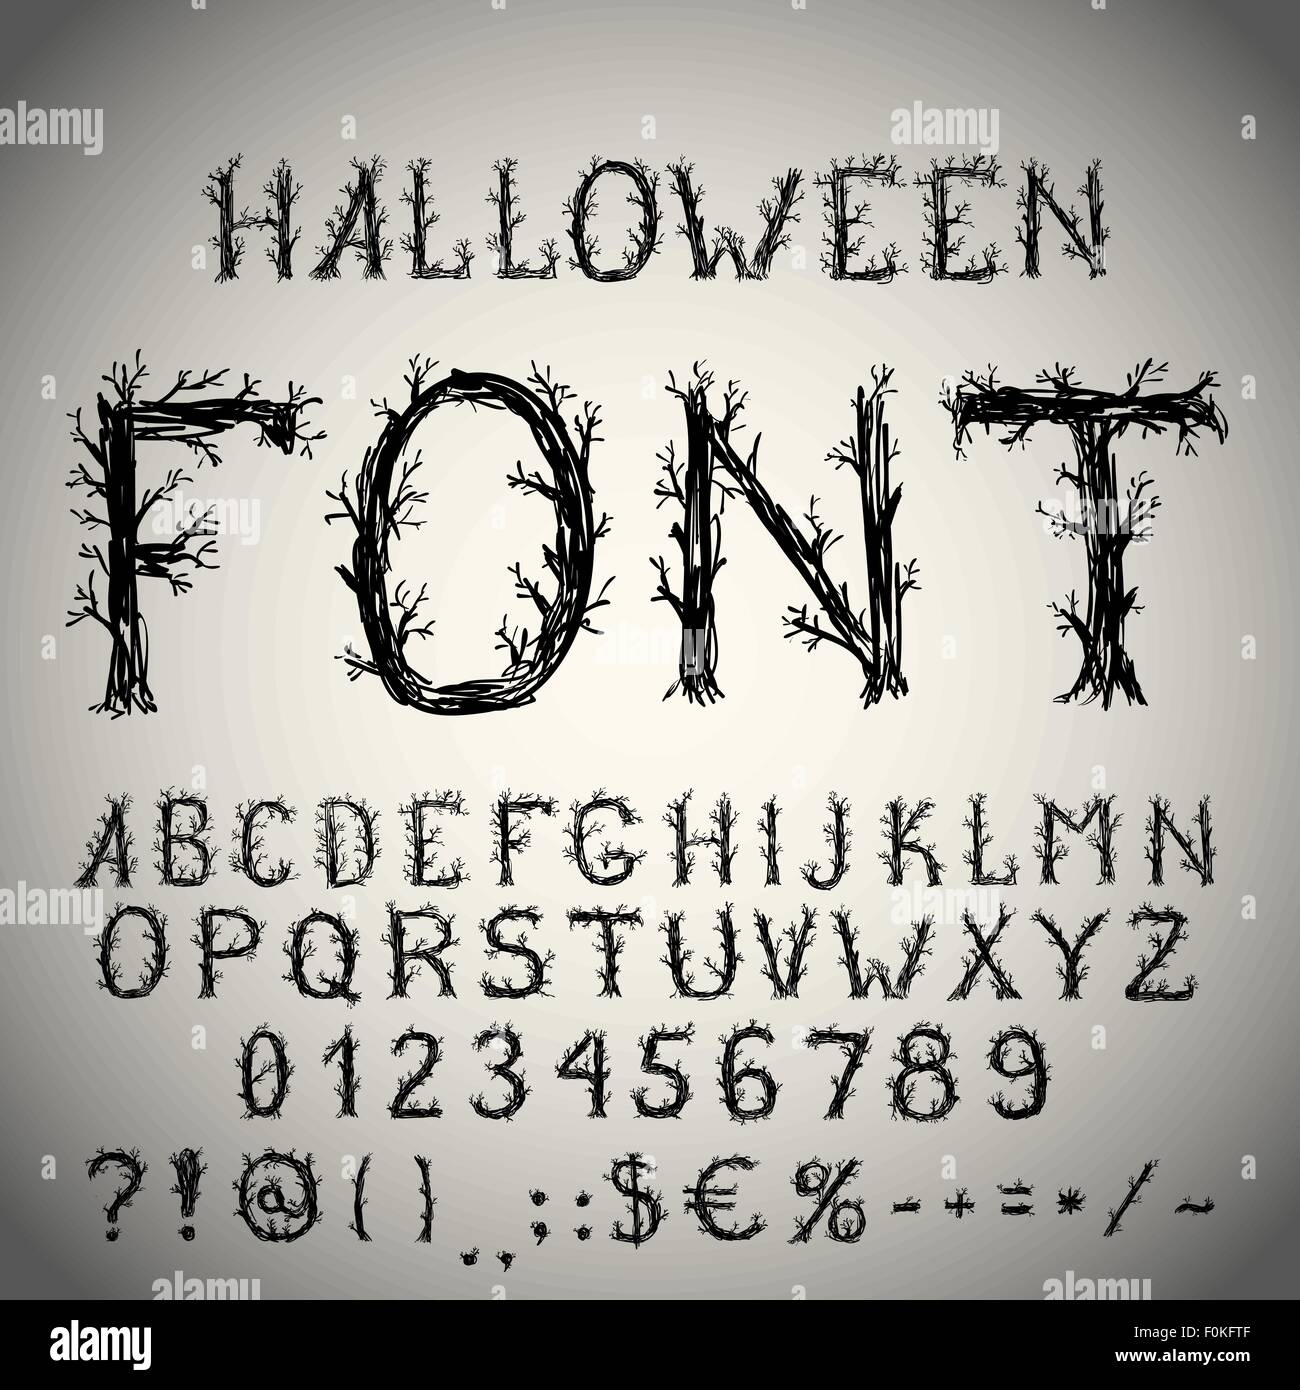 spooky fonts